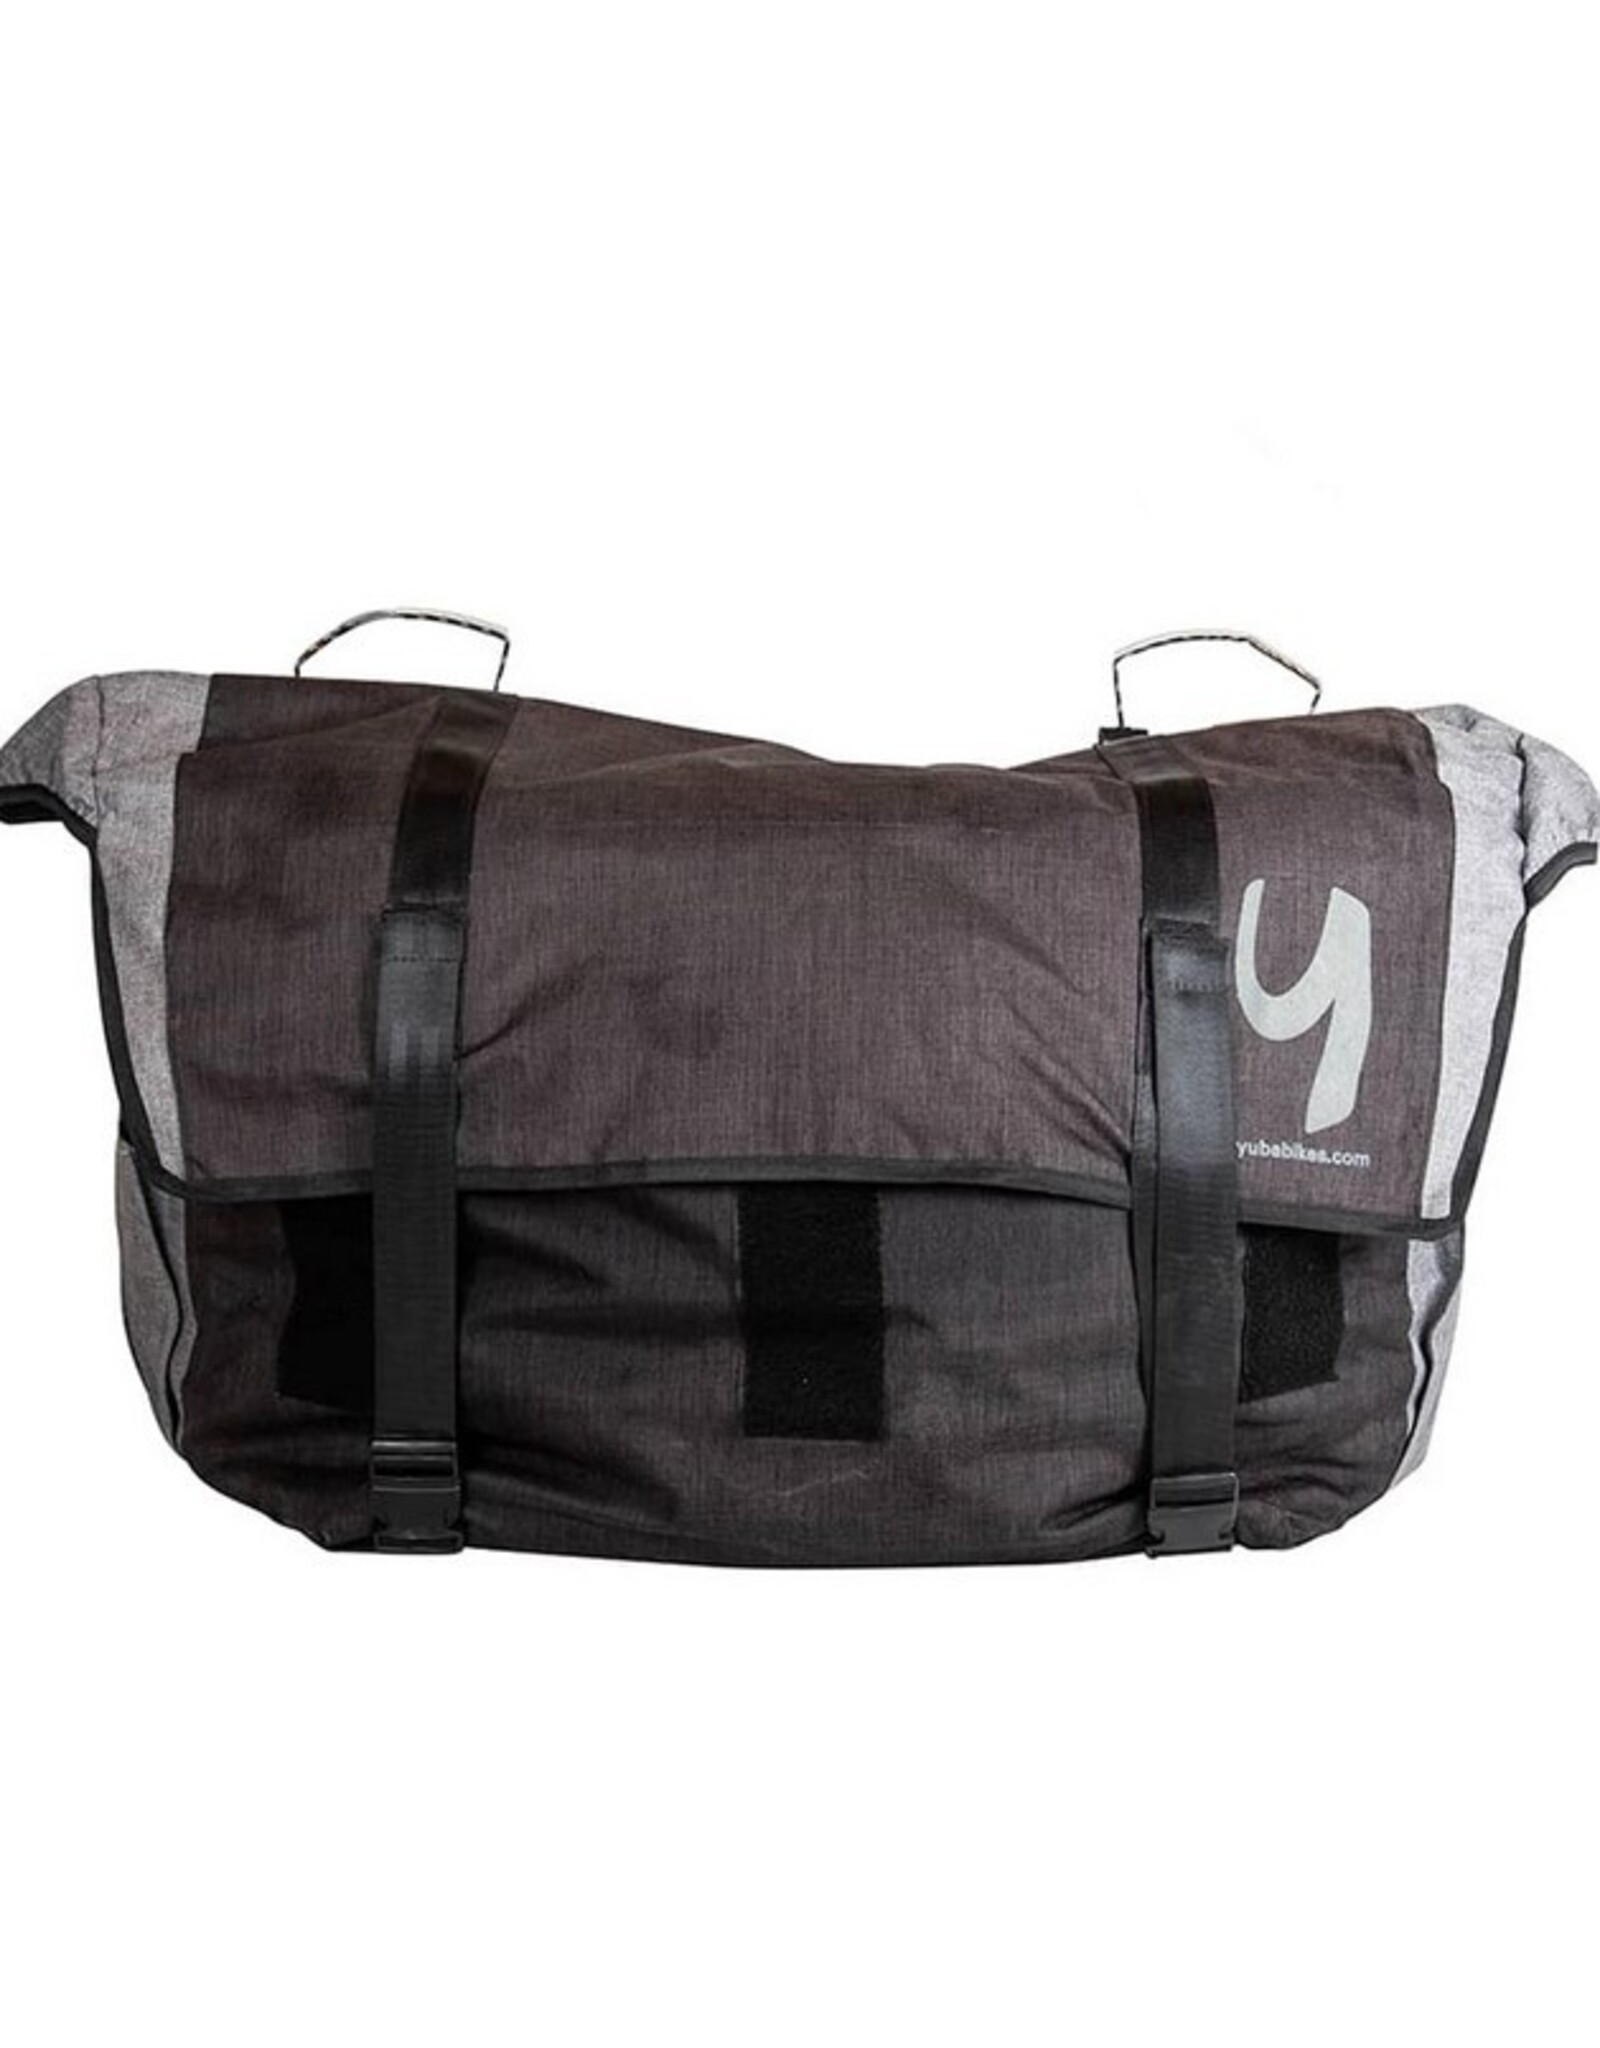 YUBA Yuba, Go-Getter Bag, XXL weatherproof bag for Mundo (85 liters)